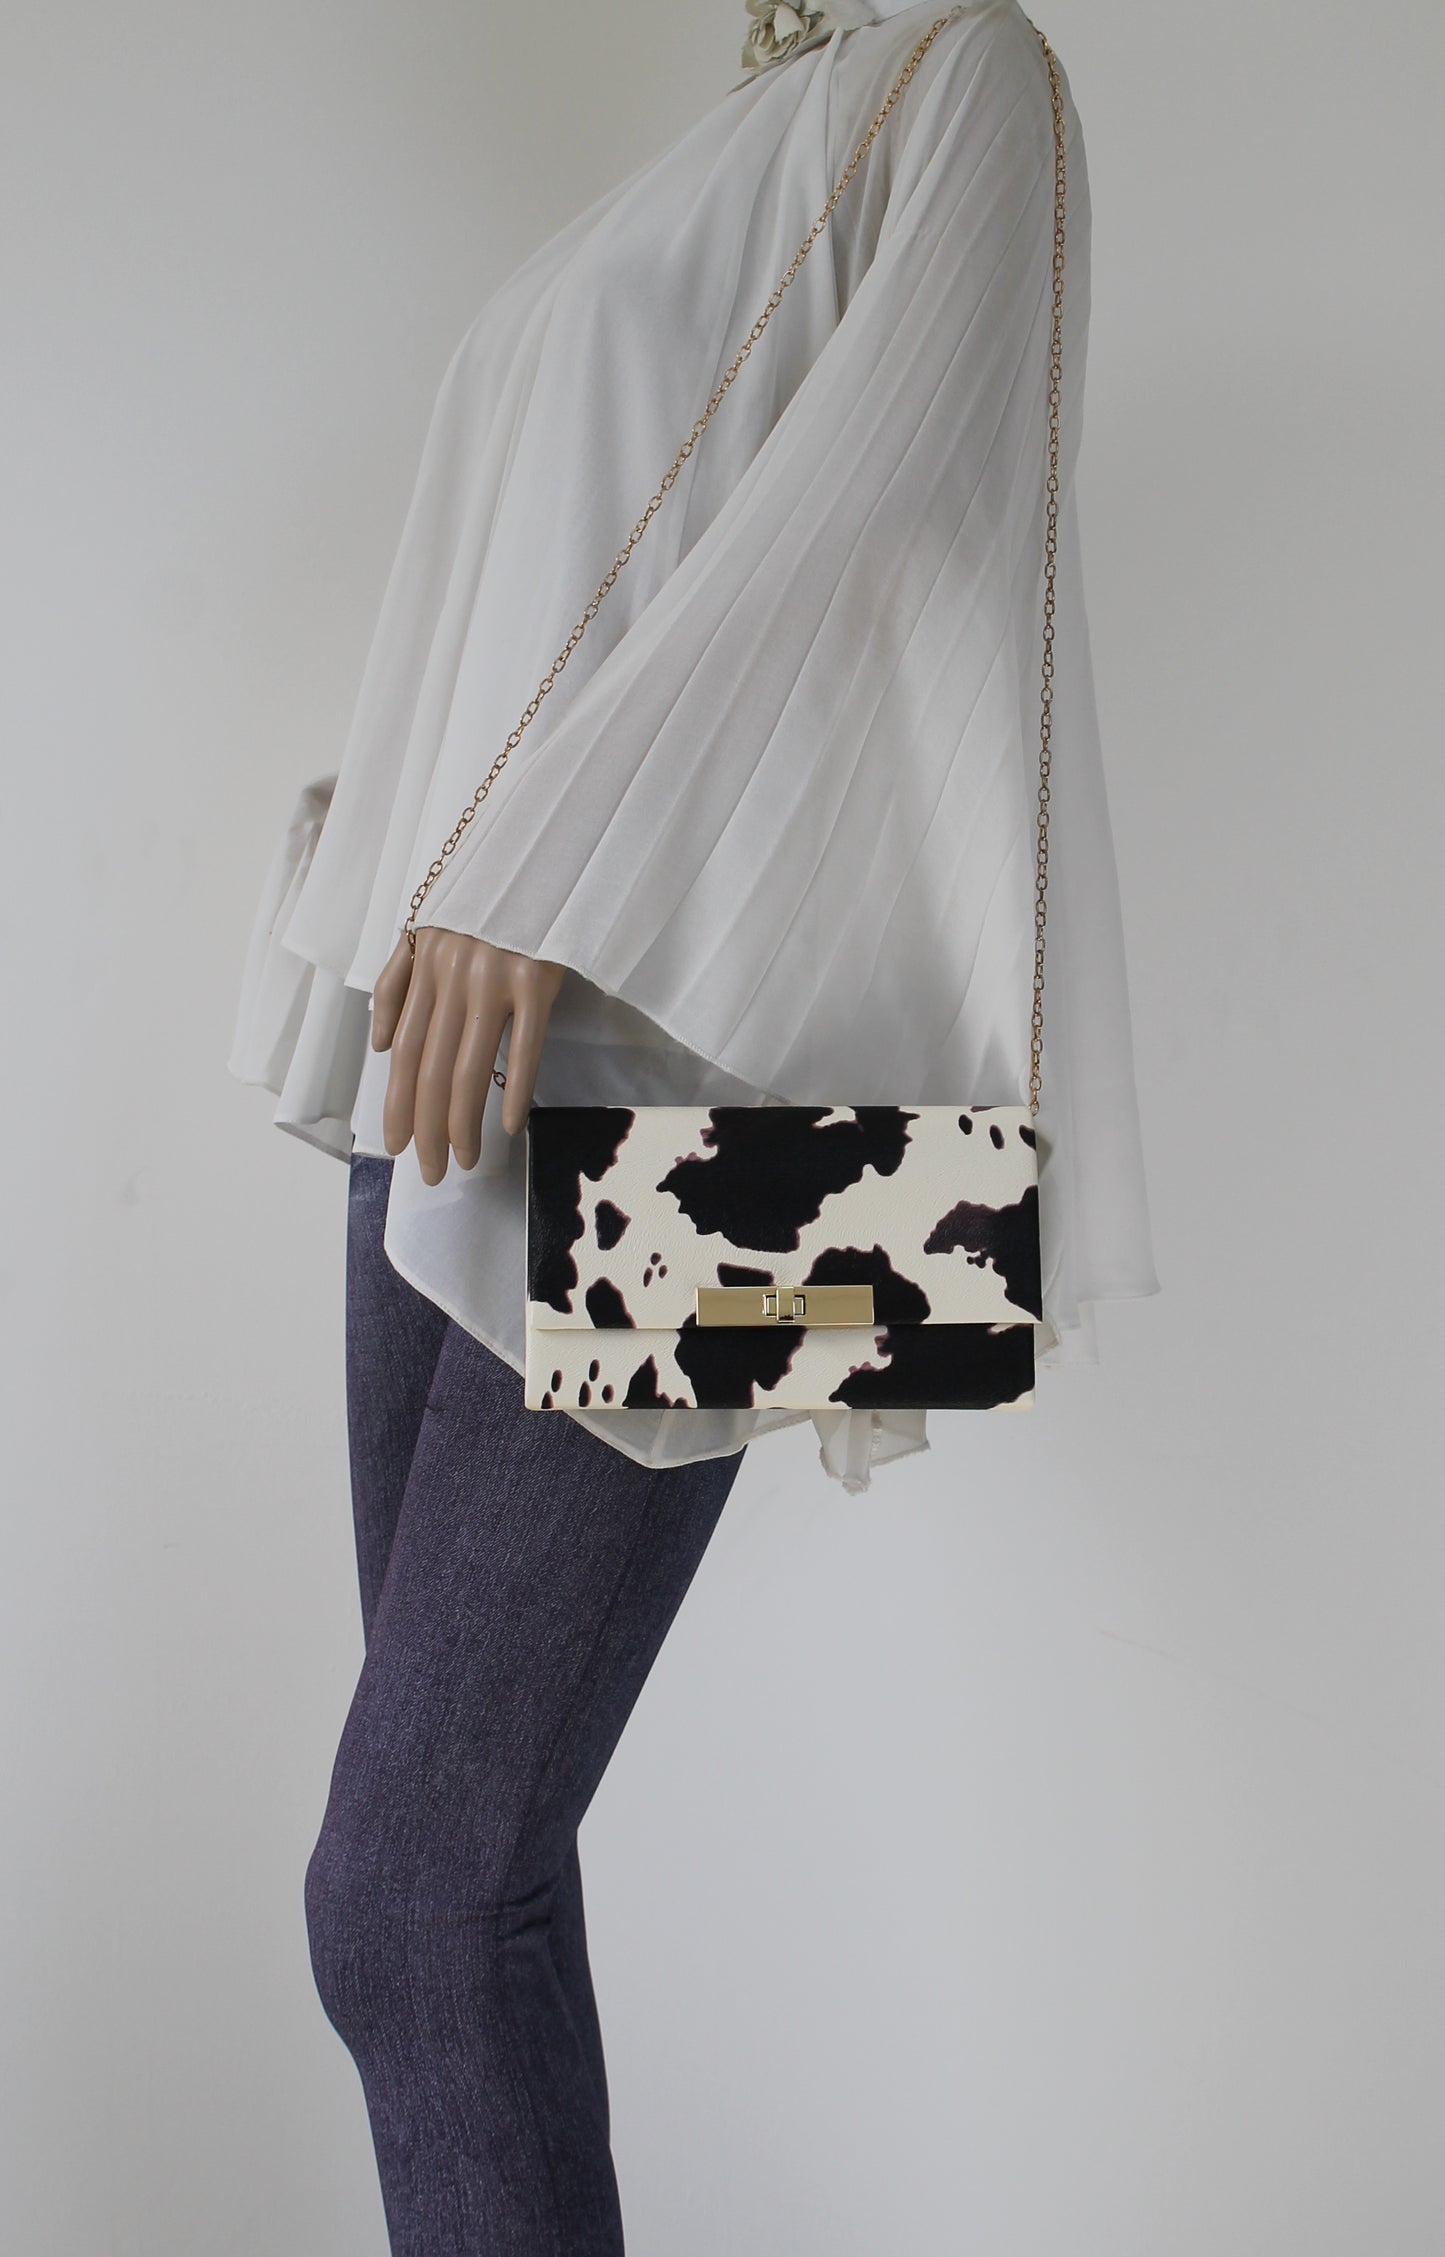 Tana Faux Leather Animal Style Clutch Bag Pony Skin Black & White